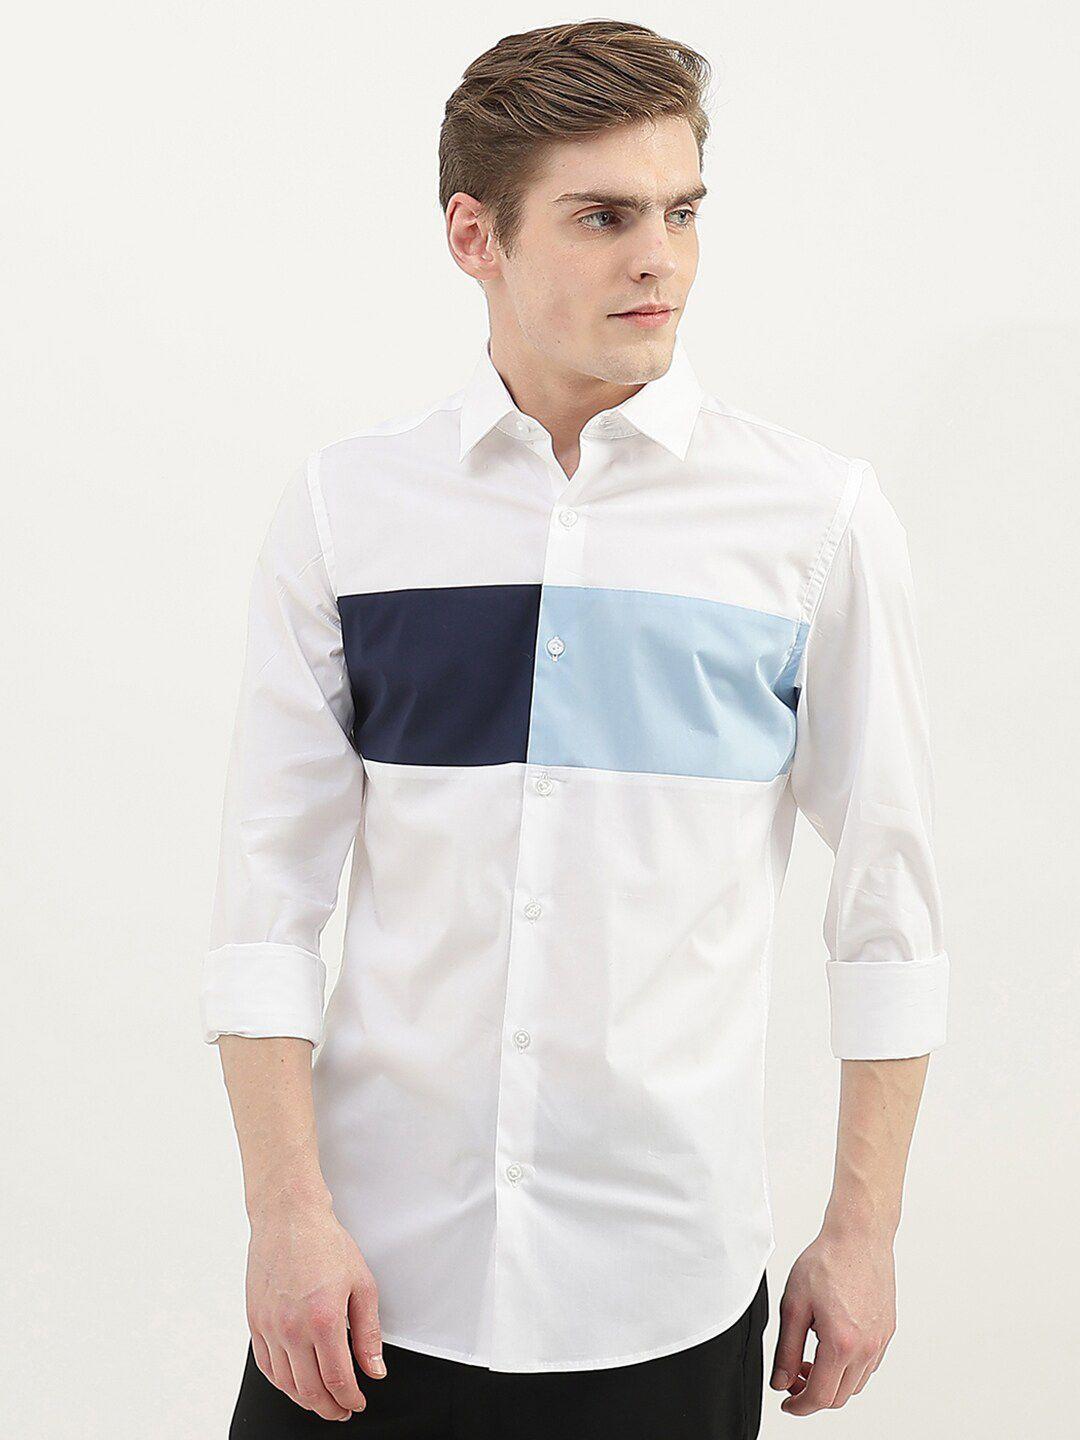 united-colors-of-benetton-men-slim-fit-colourblocked-casual-shirt